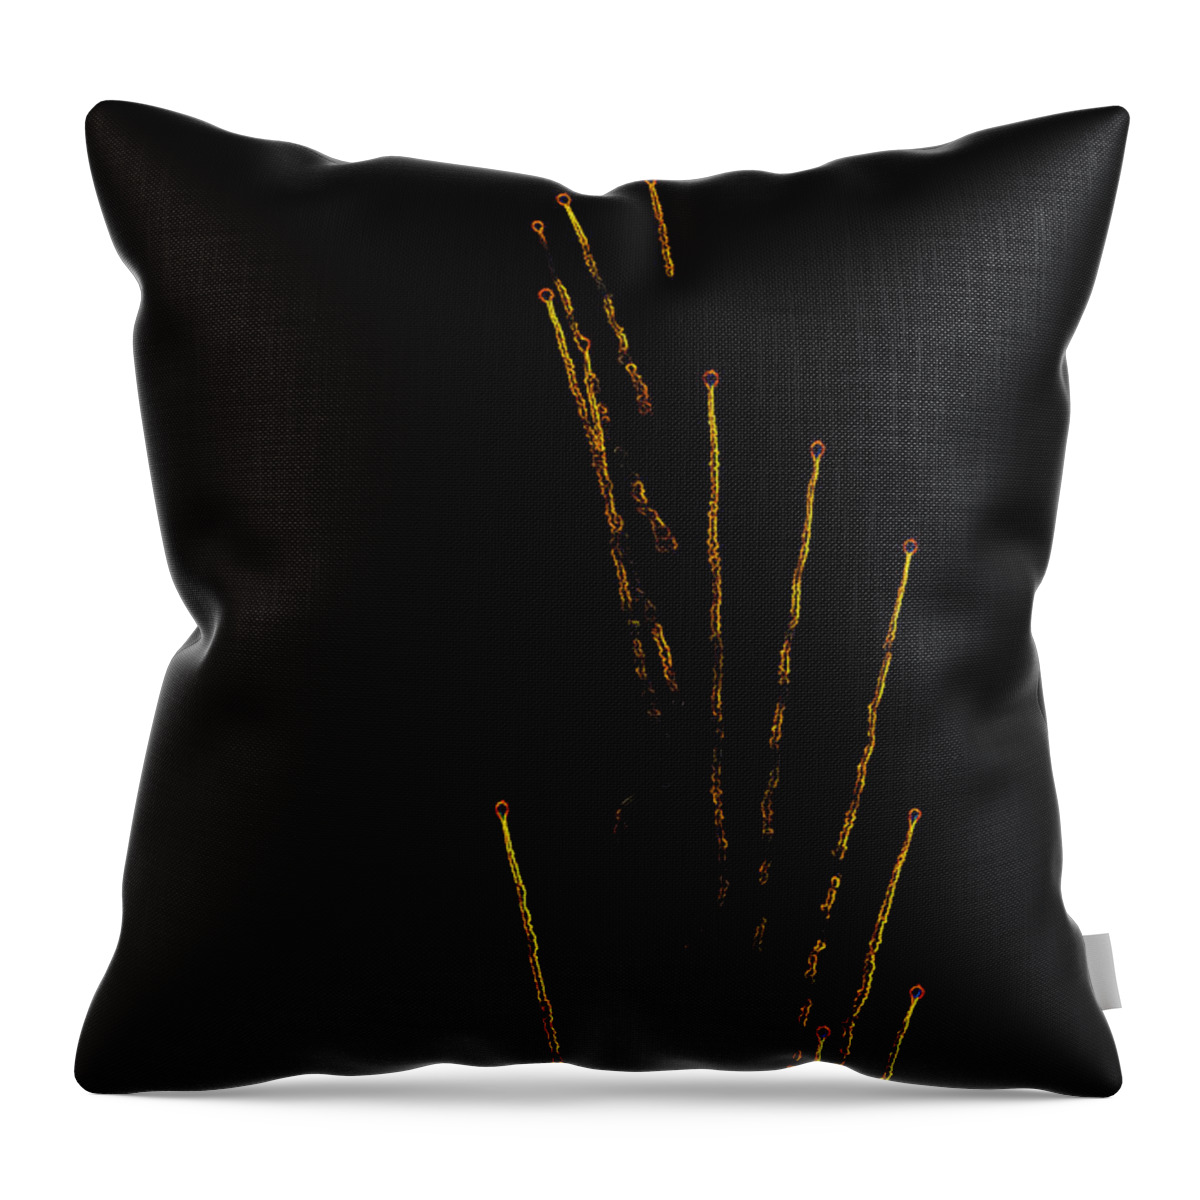 2014 Throw Pillow featuring the digital art Night Warfare by Ray Shiu